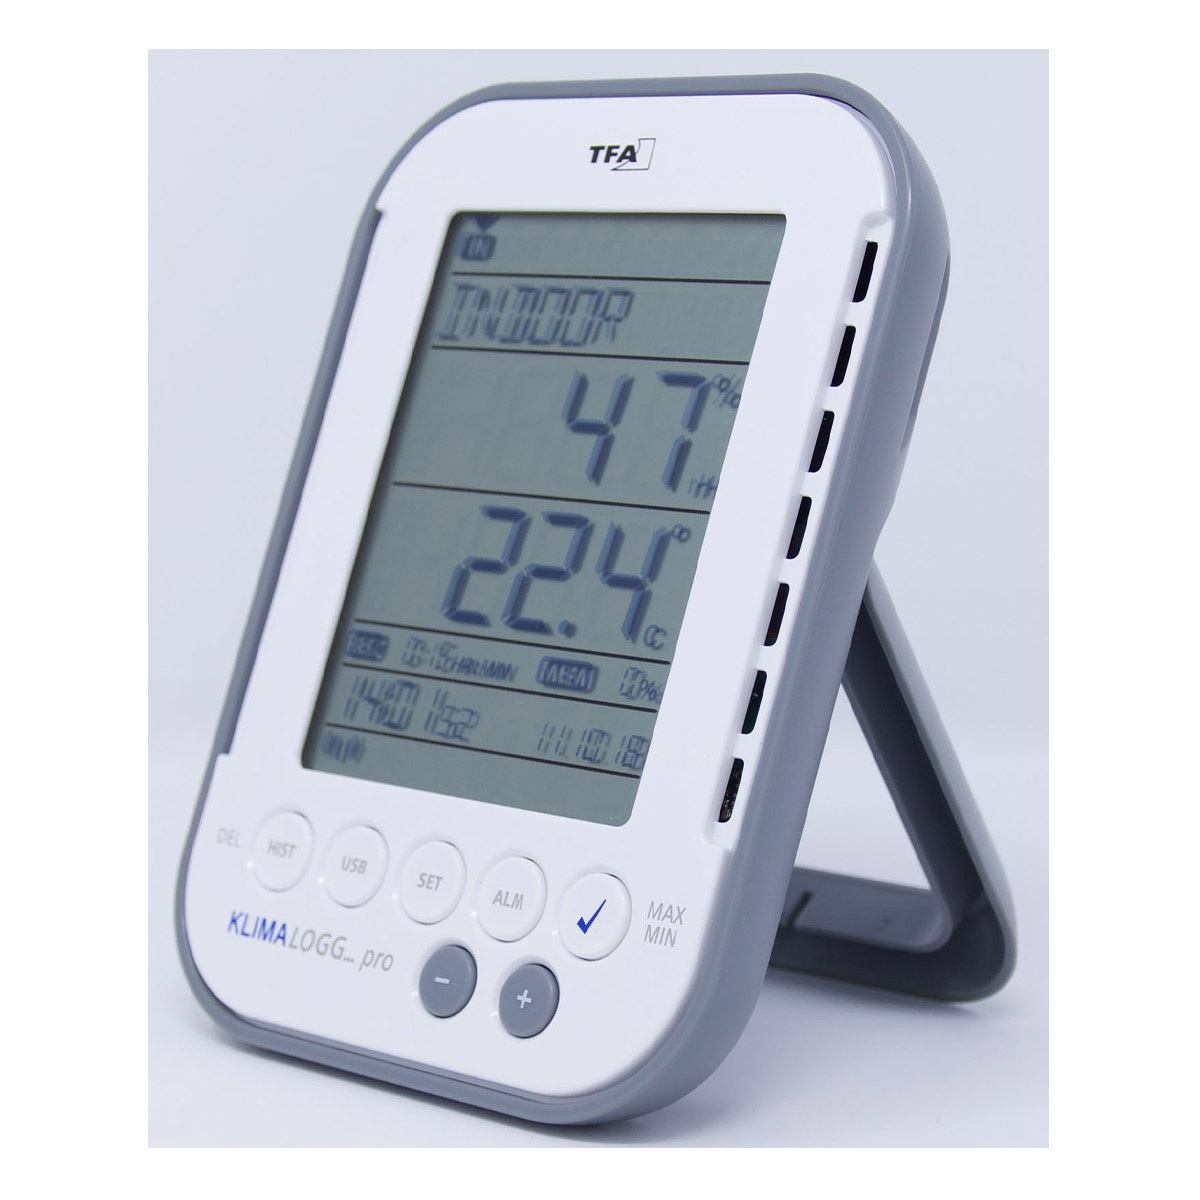 KLIMALOGG pro tfa 30.3039.it HYGROMÈTRE Climat-datenlogger thermomètre usb pc 